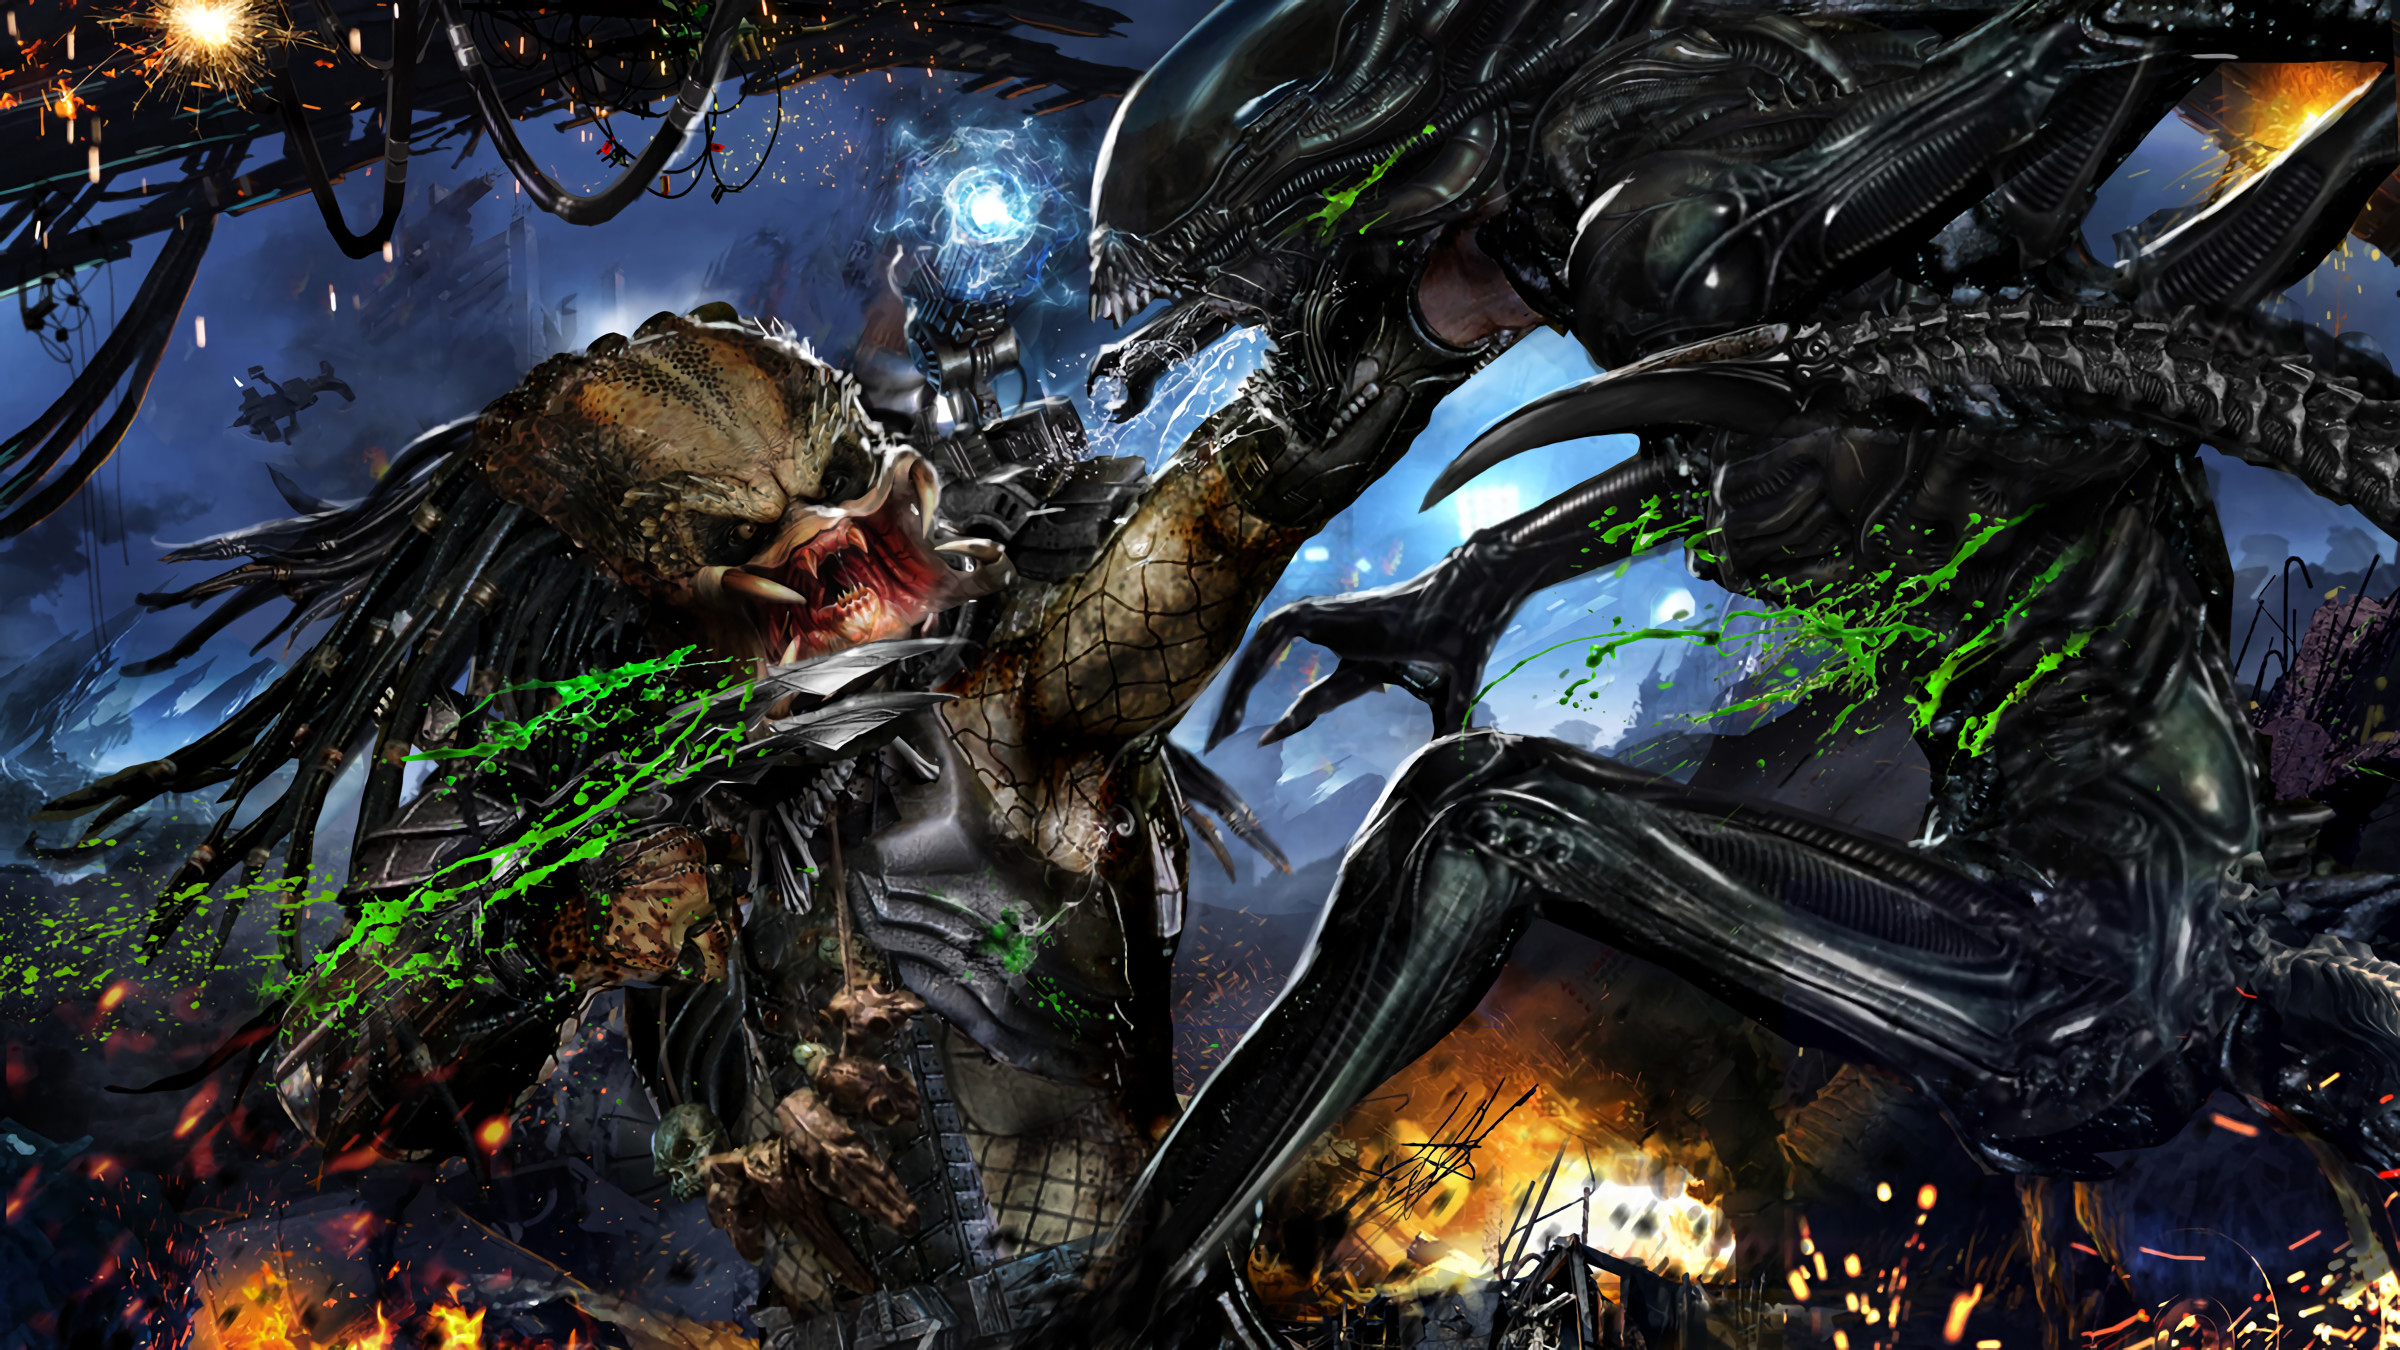 2400x1350 Alien vs. Predator HD Wallpaper | Background Image |  | ID:785112  - Wallpaper Abyss